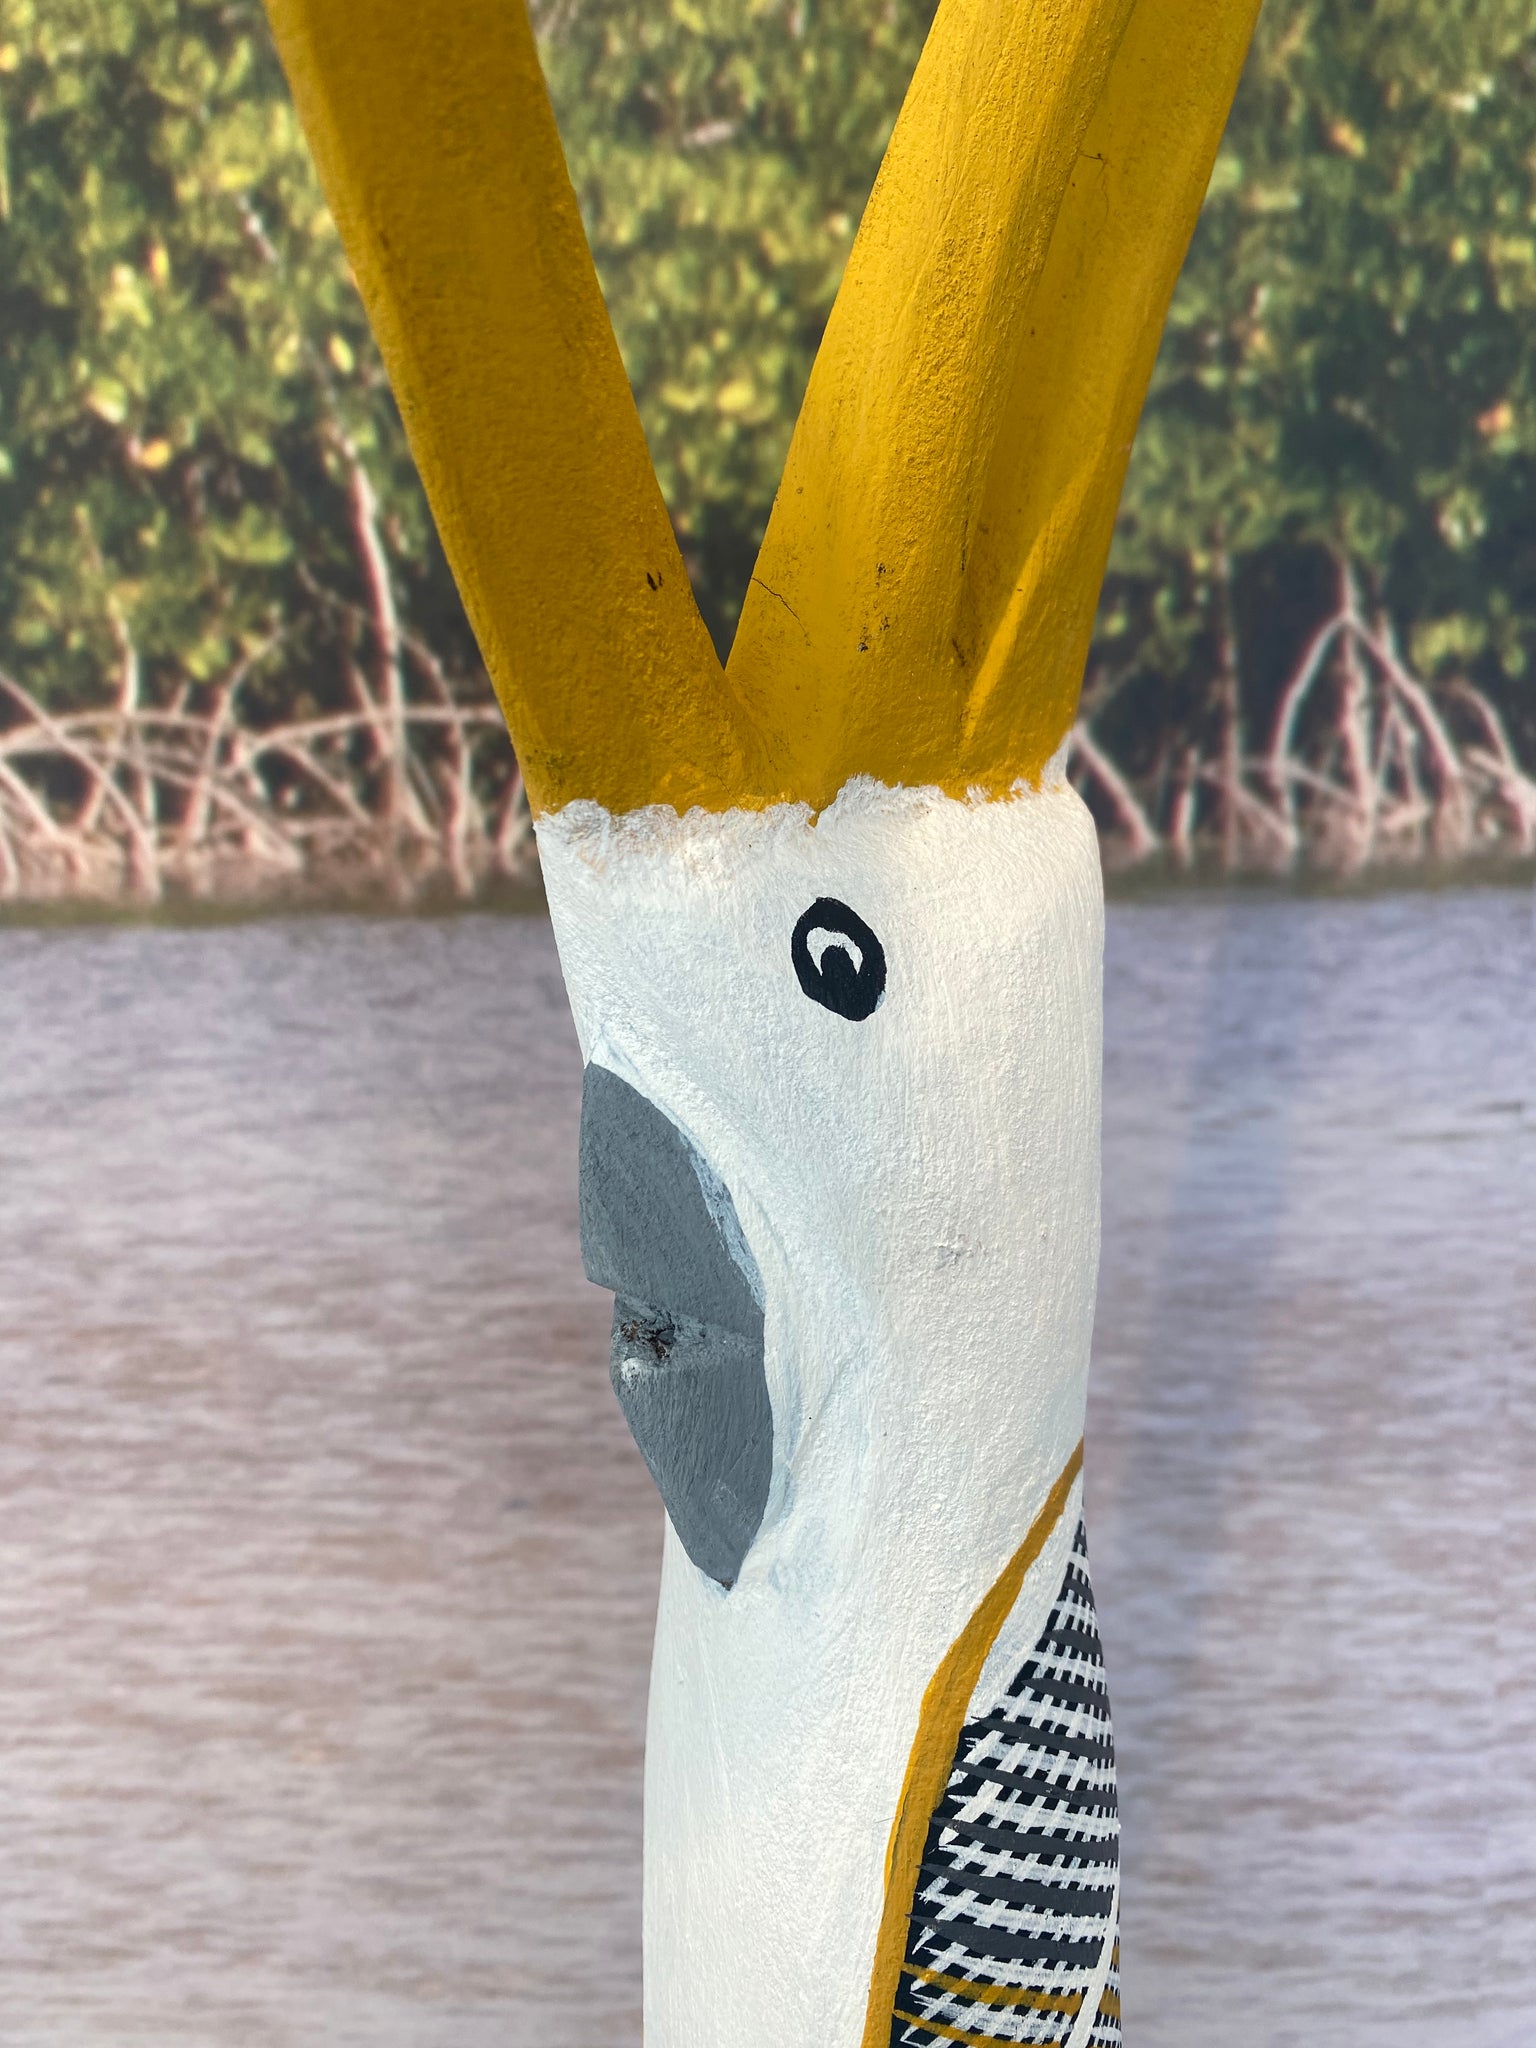 26. Ngarradj (Sulphur Crested Cockatoo)